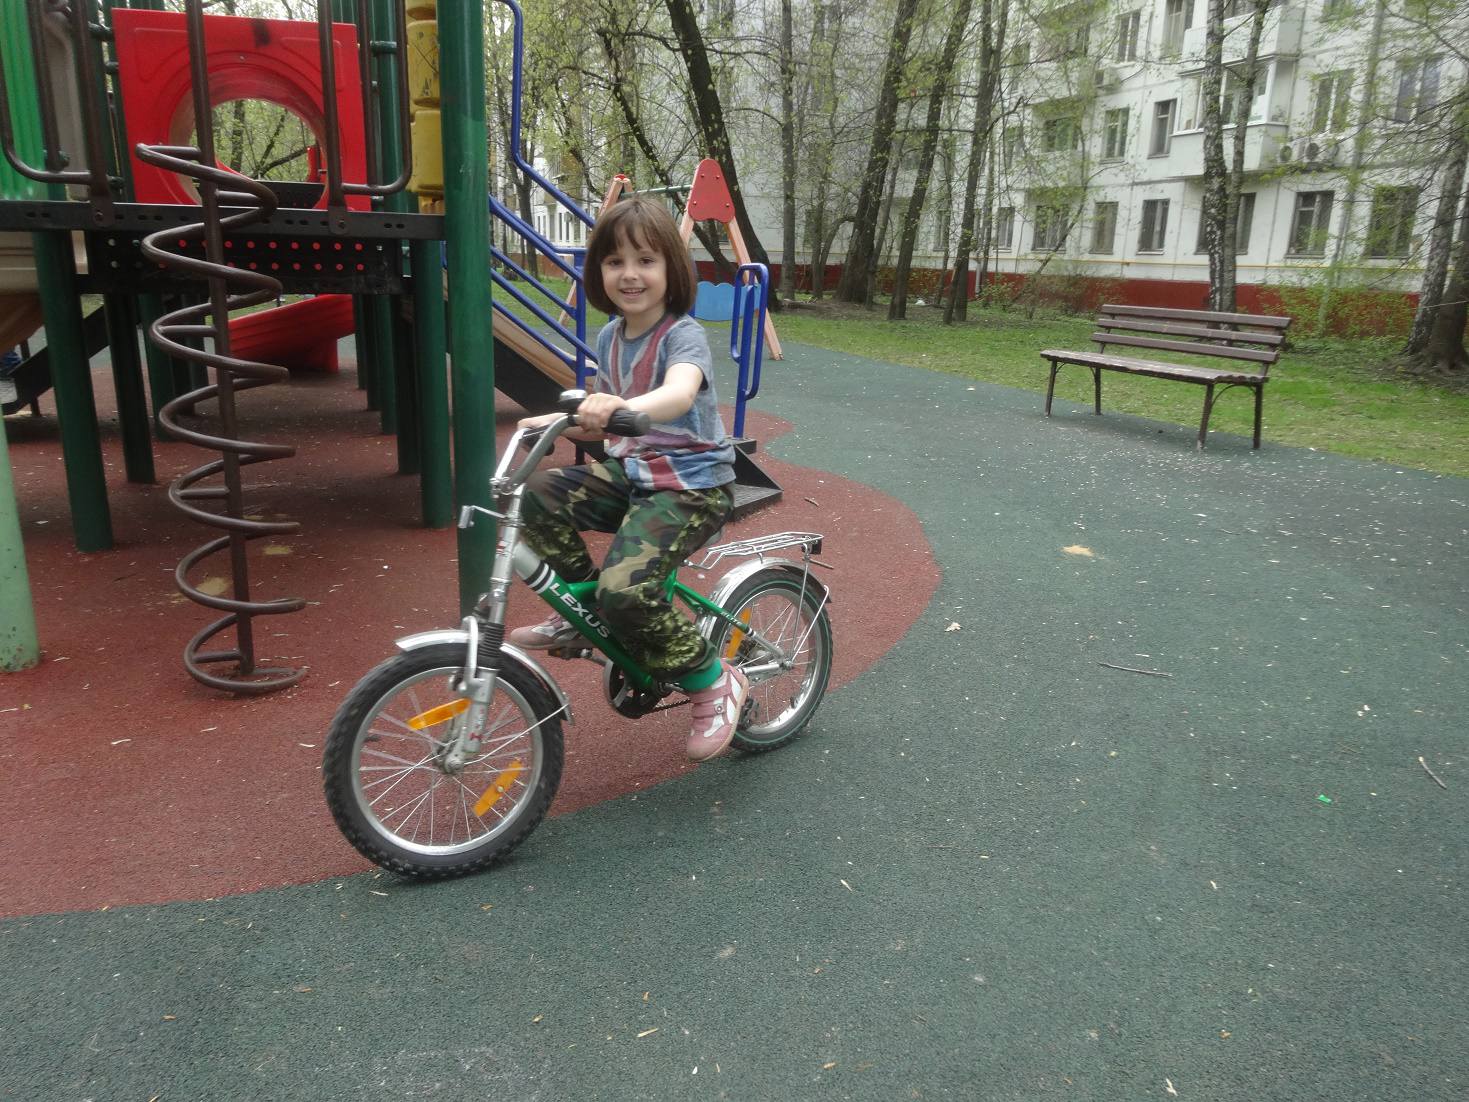 Приму в дар велосипед для дочки. Москва.